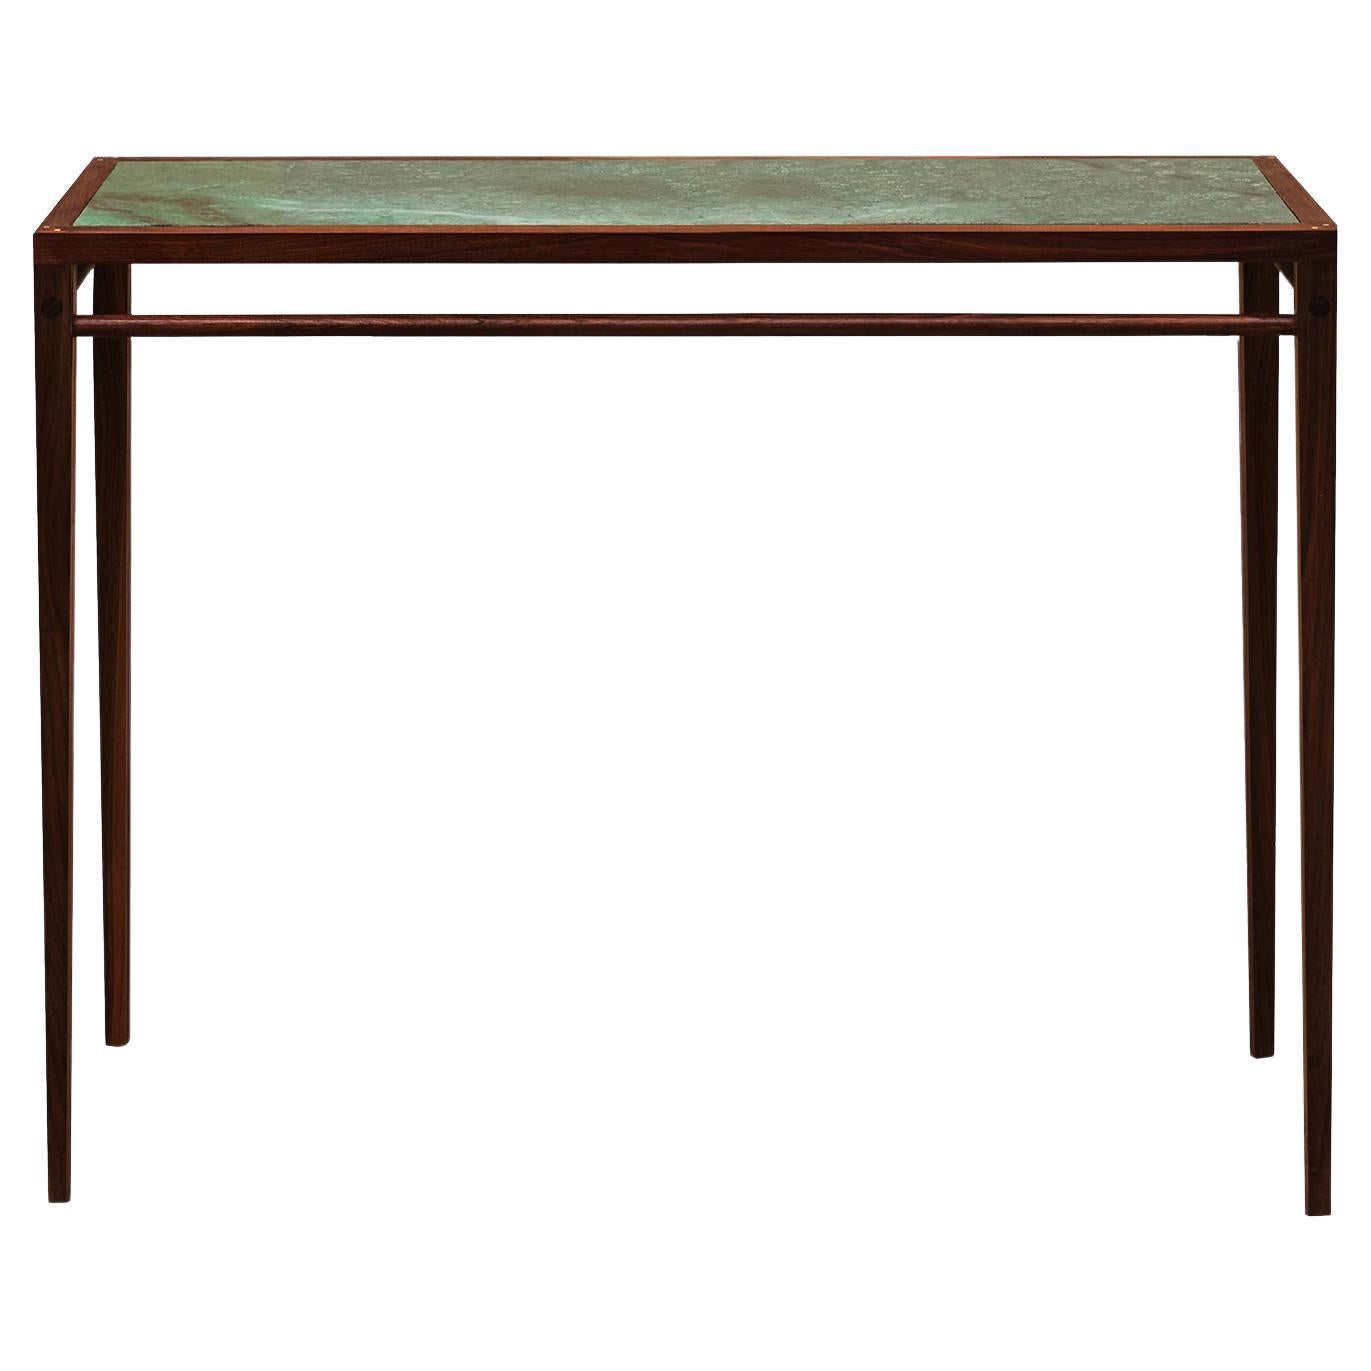 Matang, Ganga Console, Rectangular Wood and Marble Table For Sale